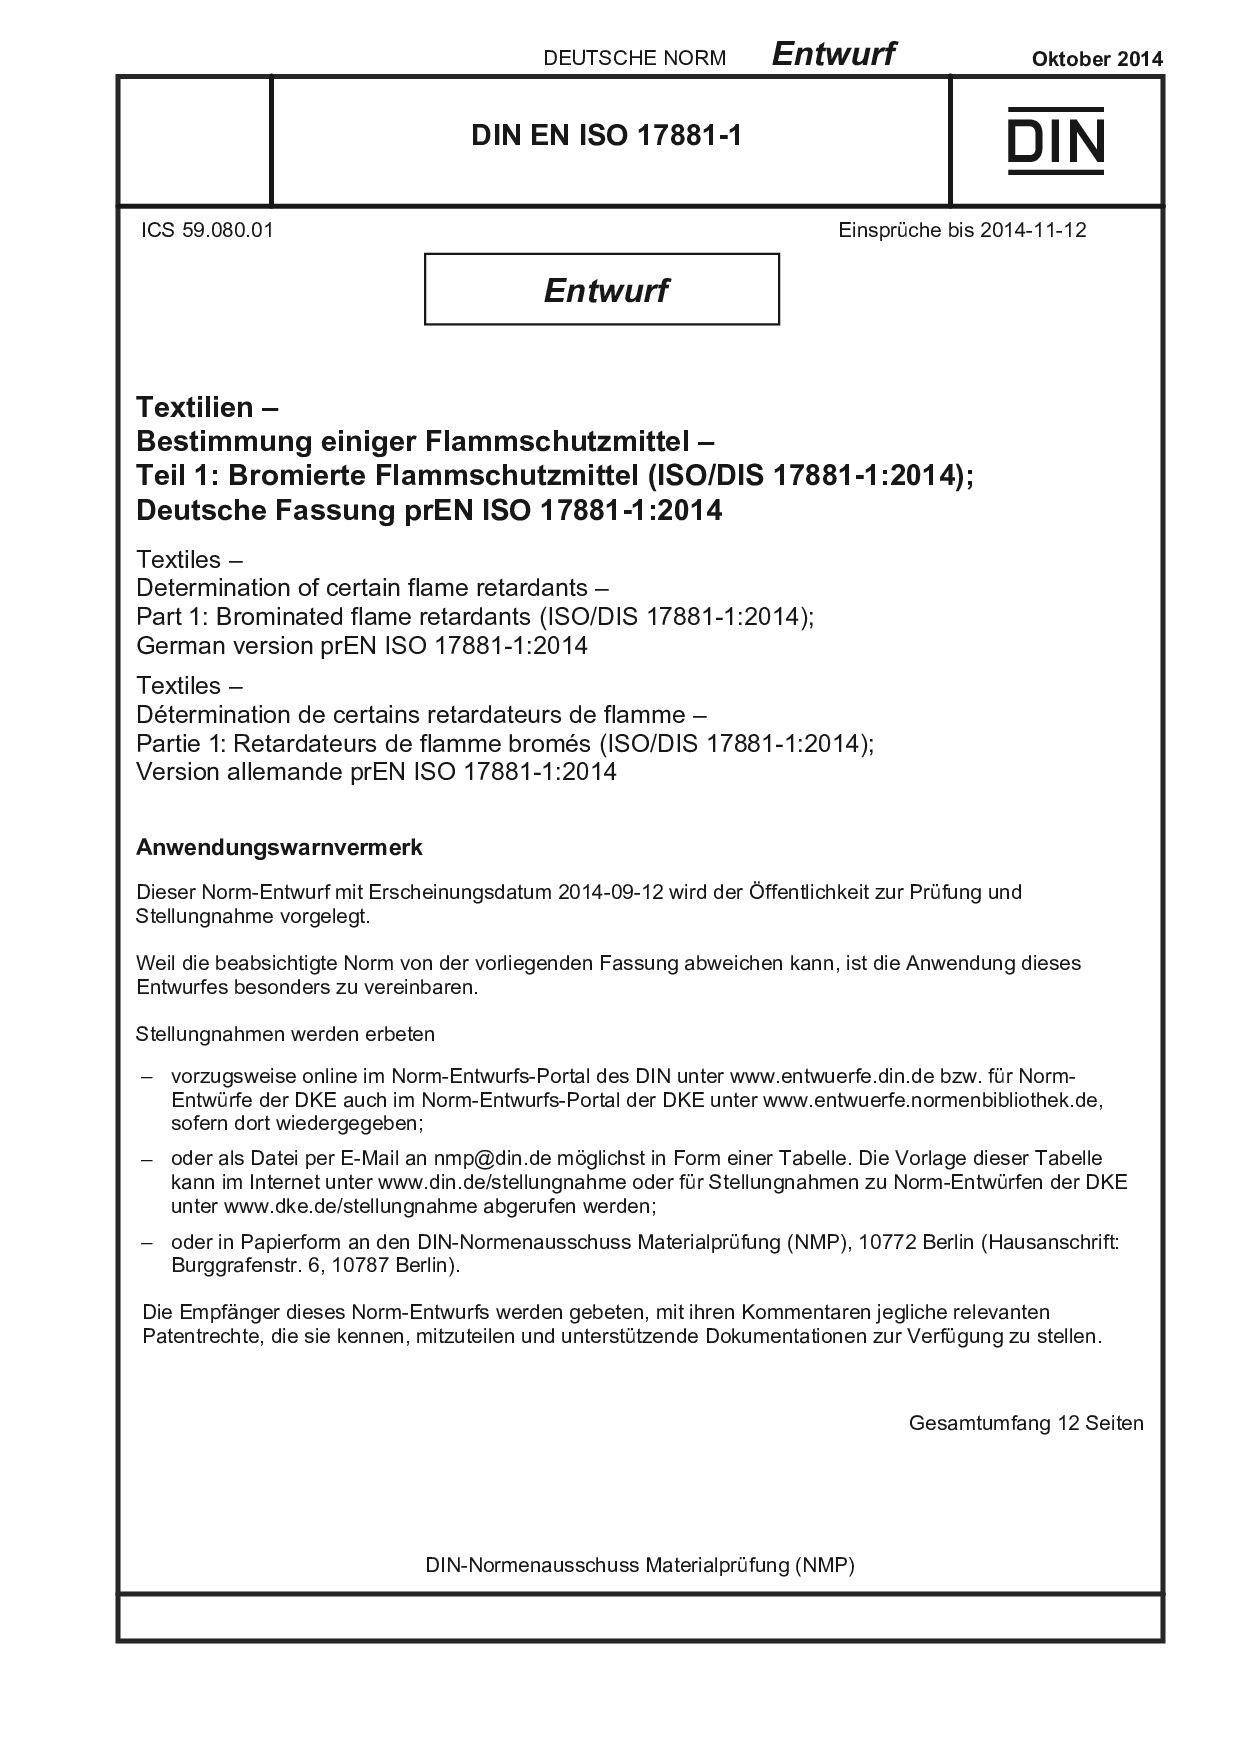 DIN EN ISO 17881-1 E:2014-10